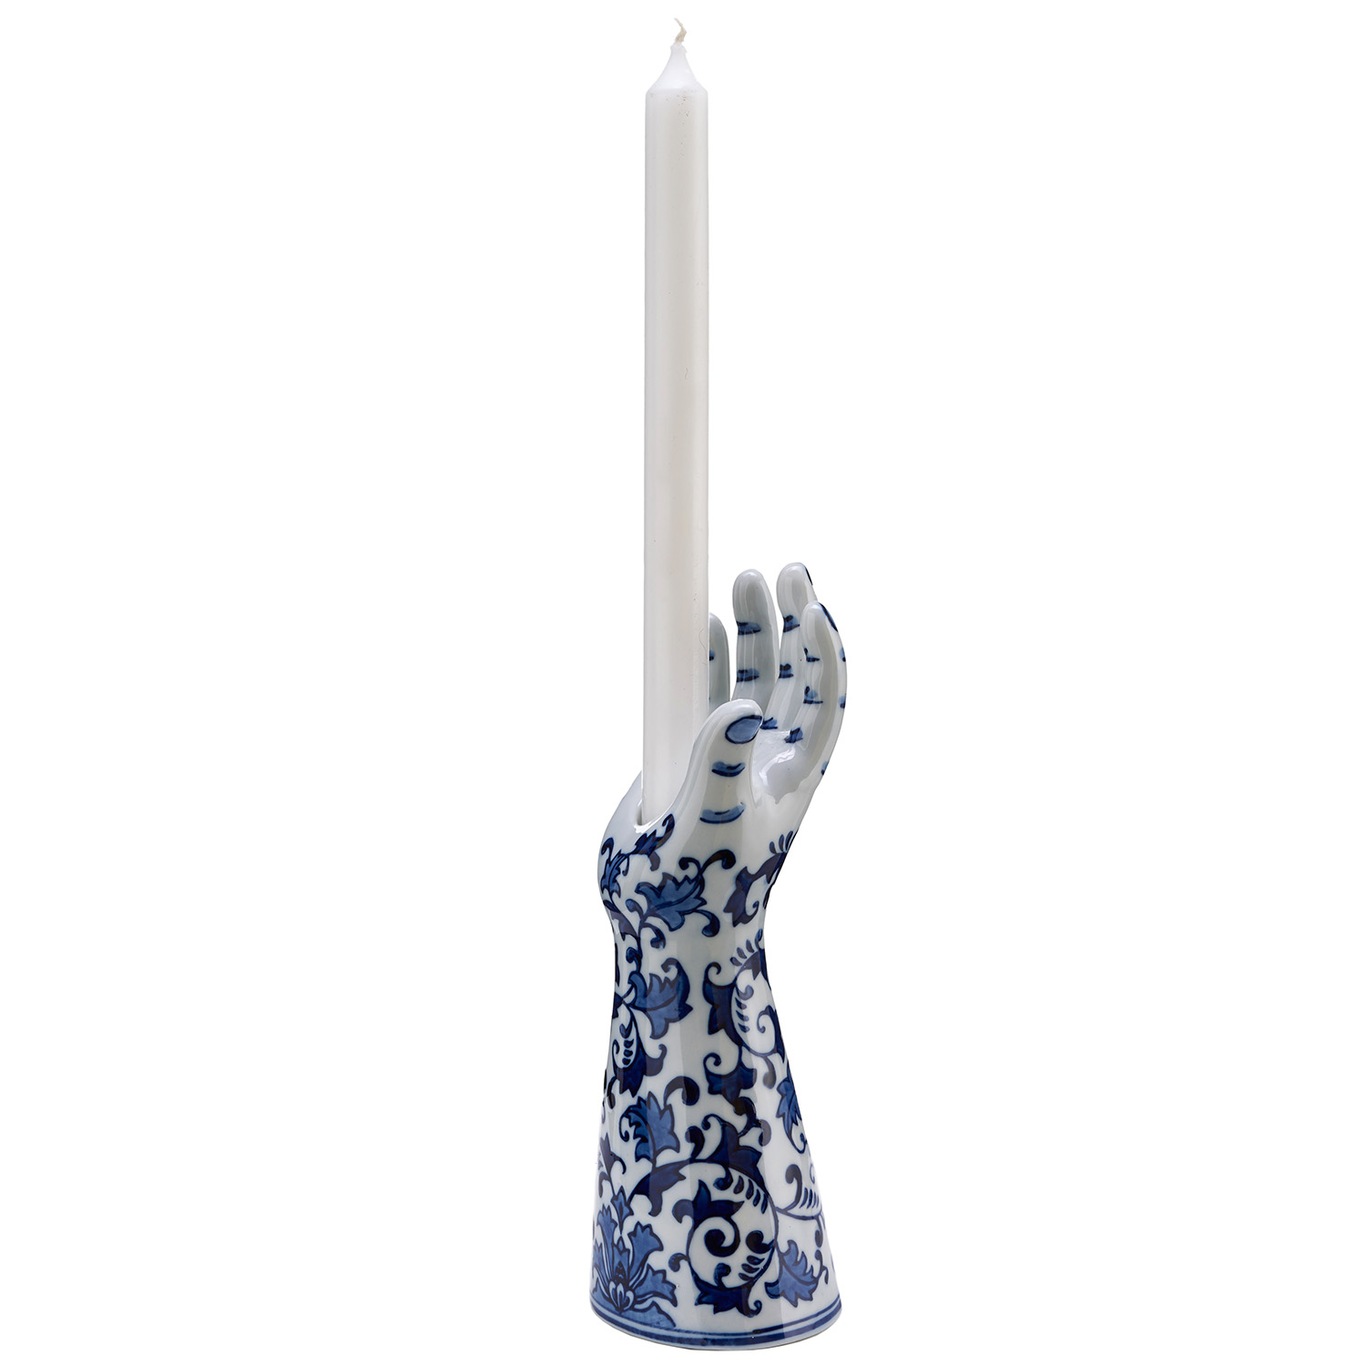 Handsup! Candle Holder 25,5 cm